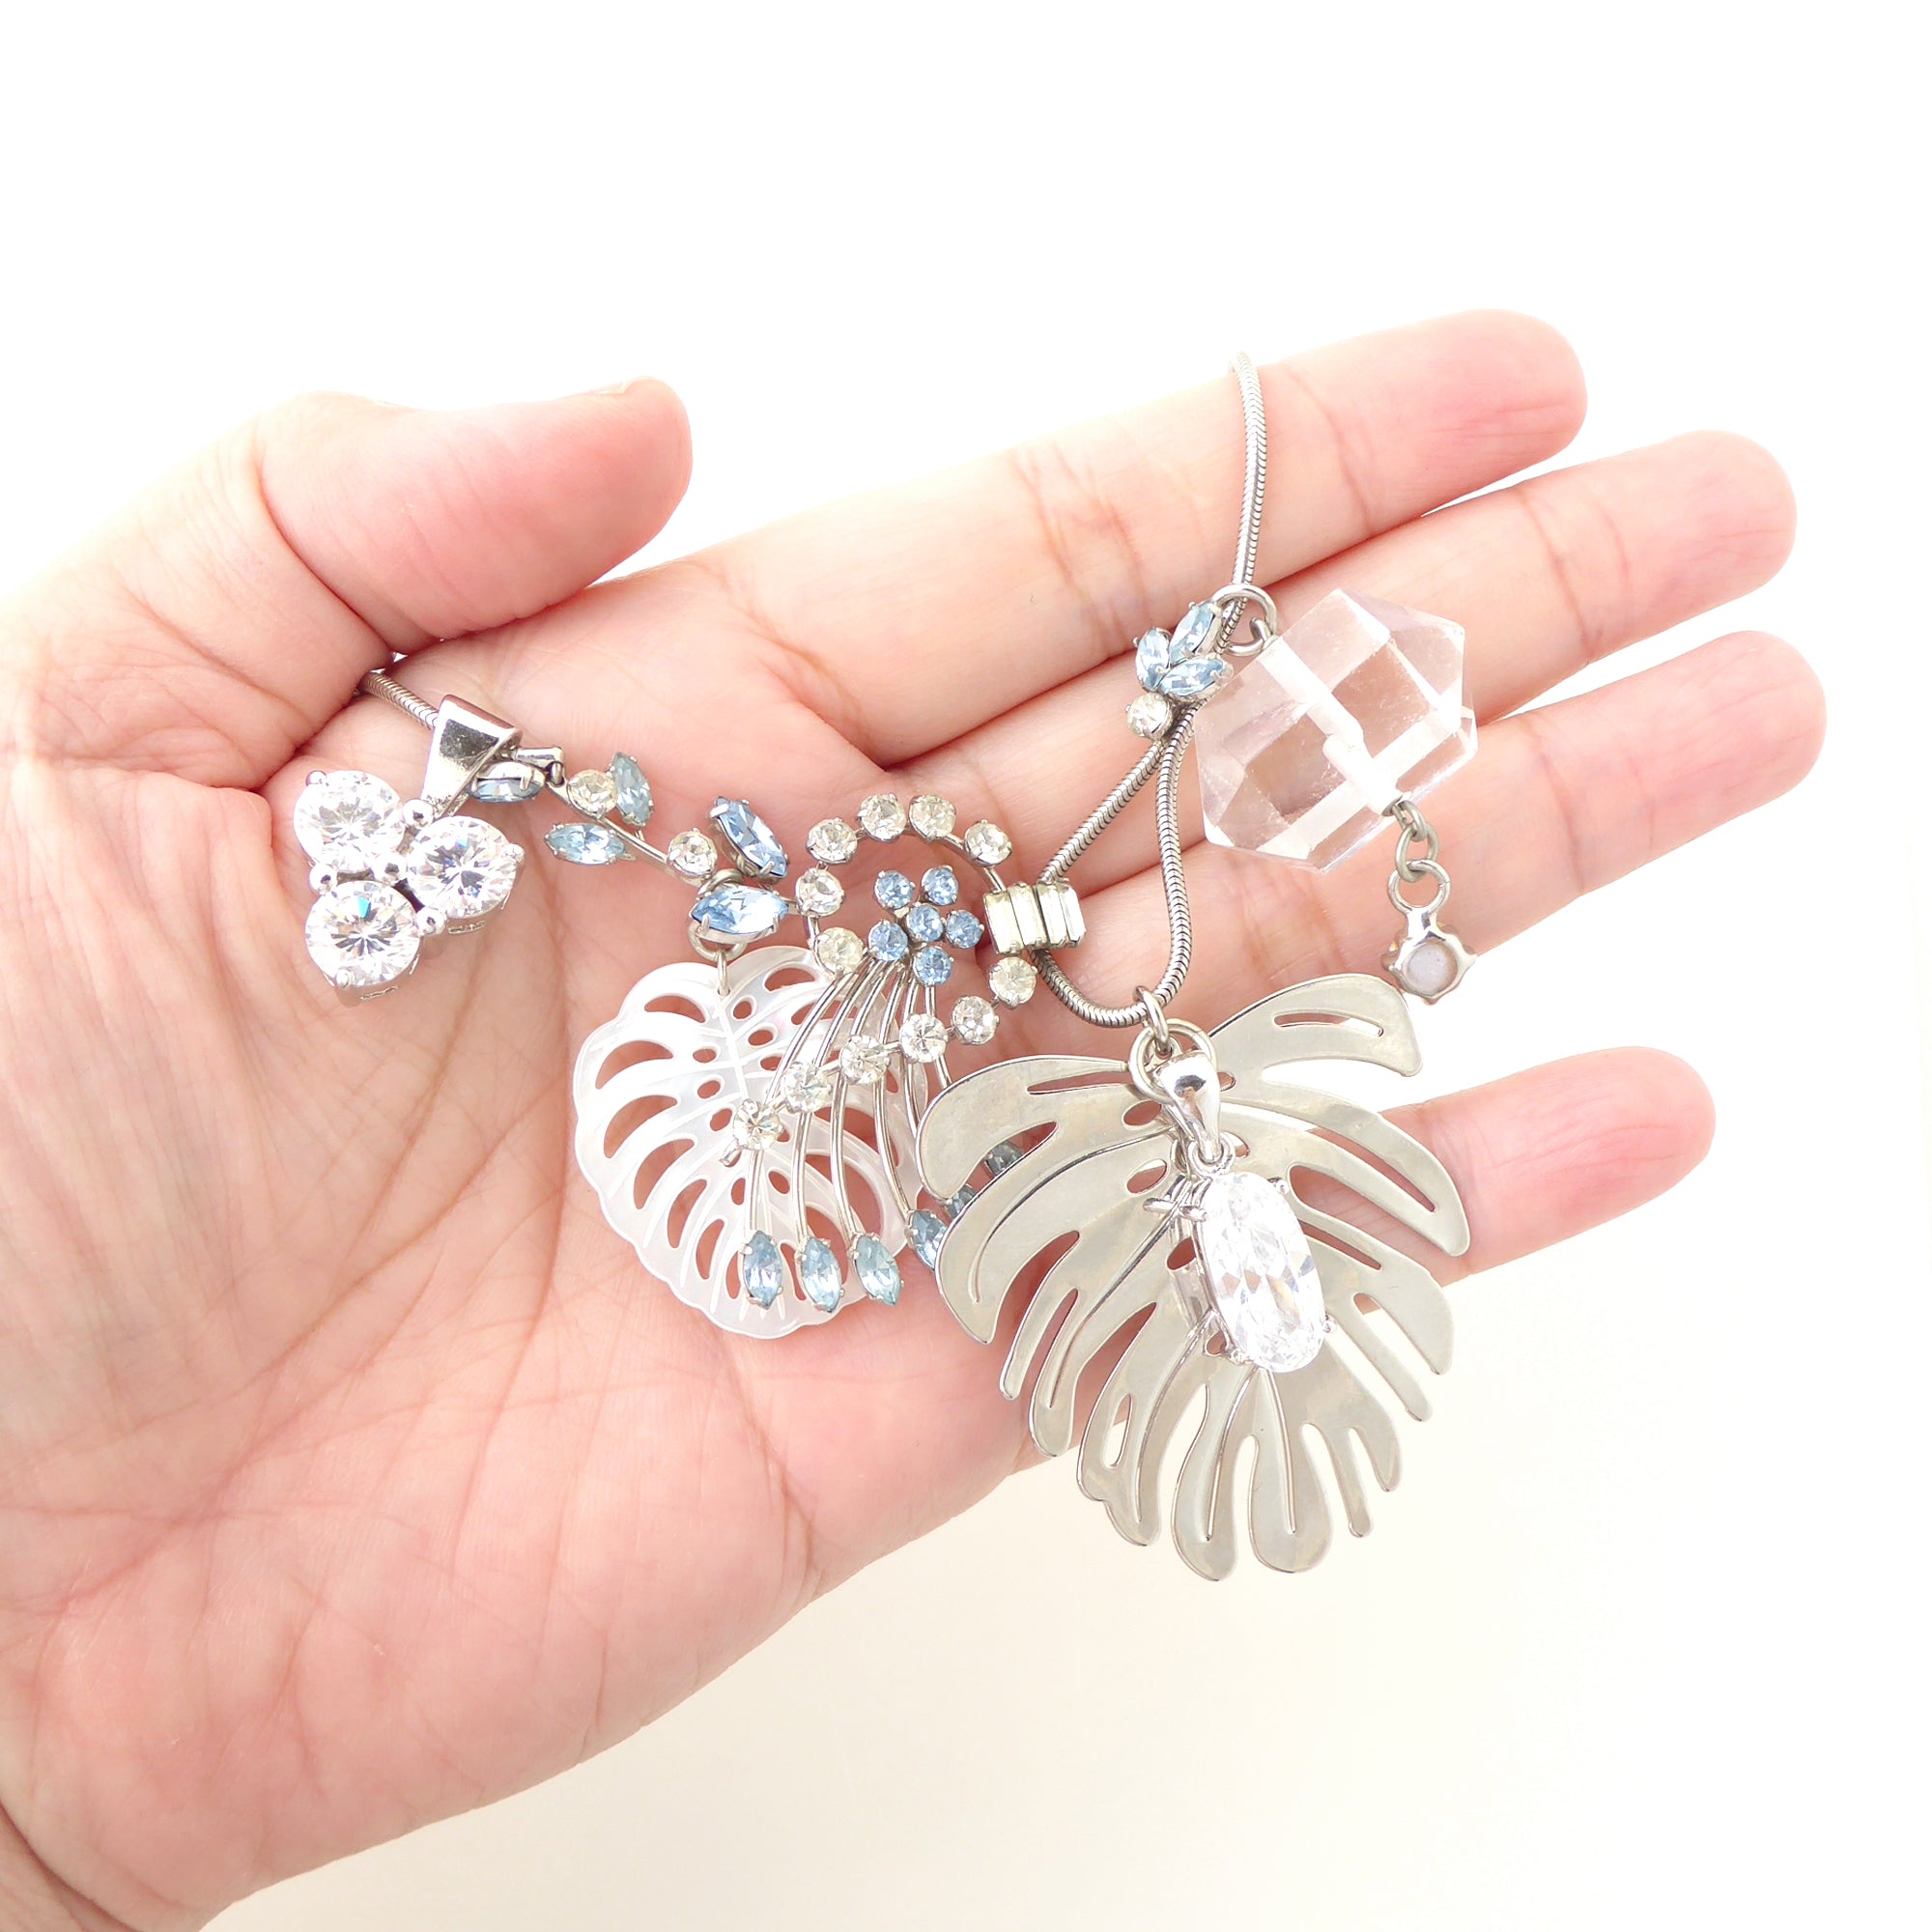 Silver monstera leaf cluster necklace by Jenny Dayco 7